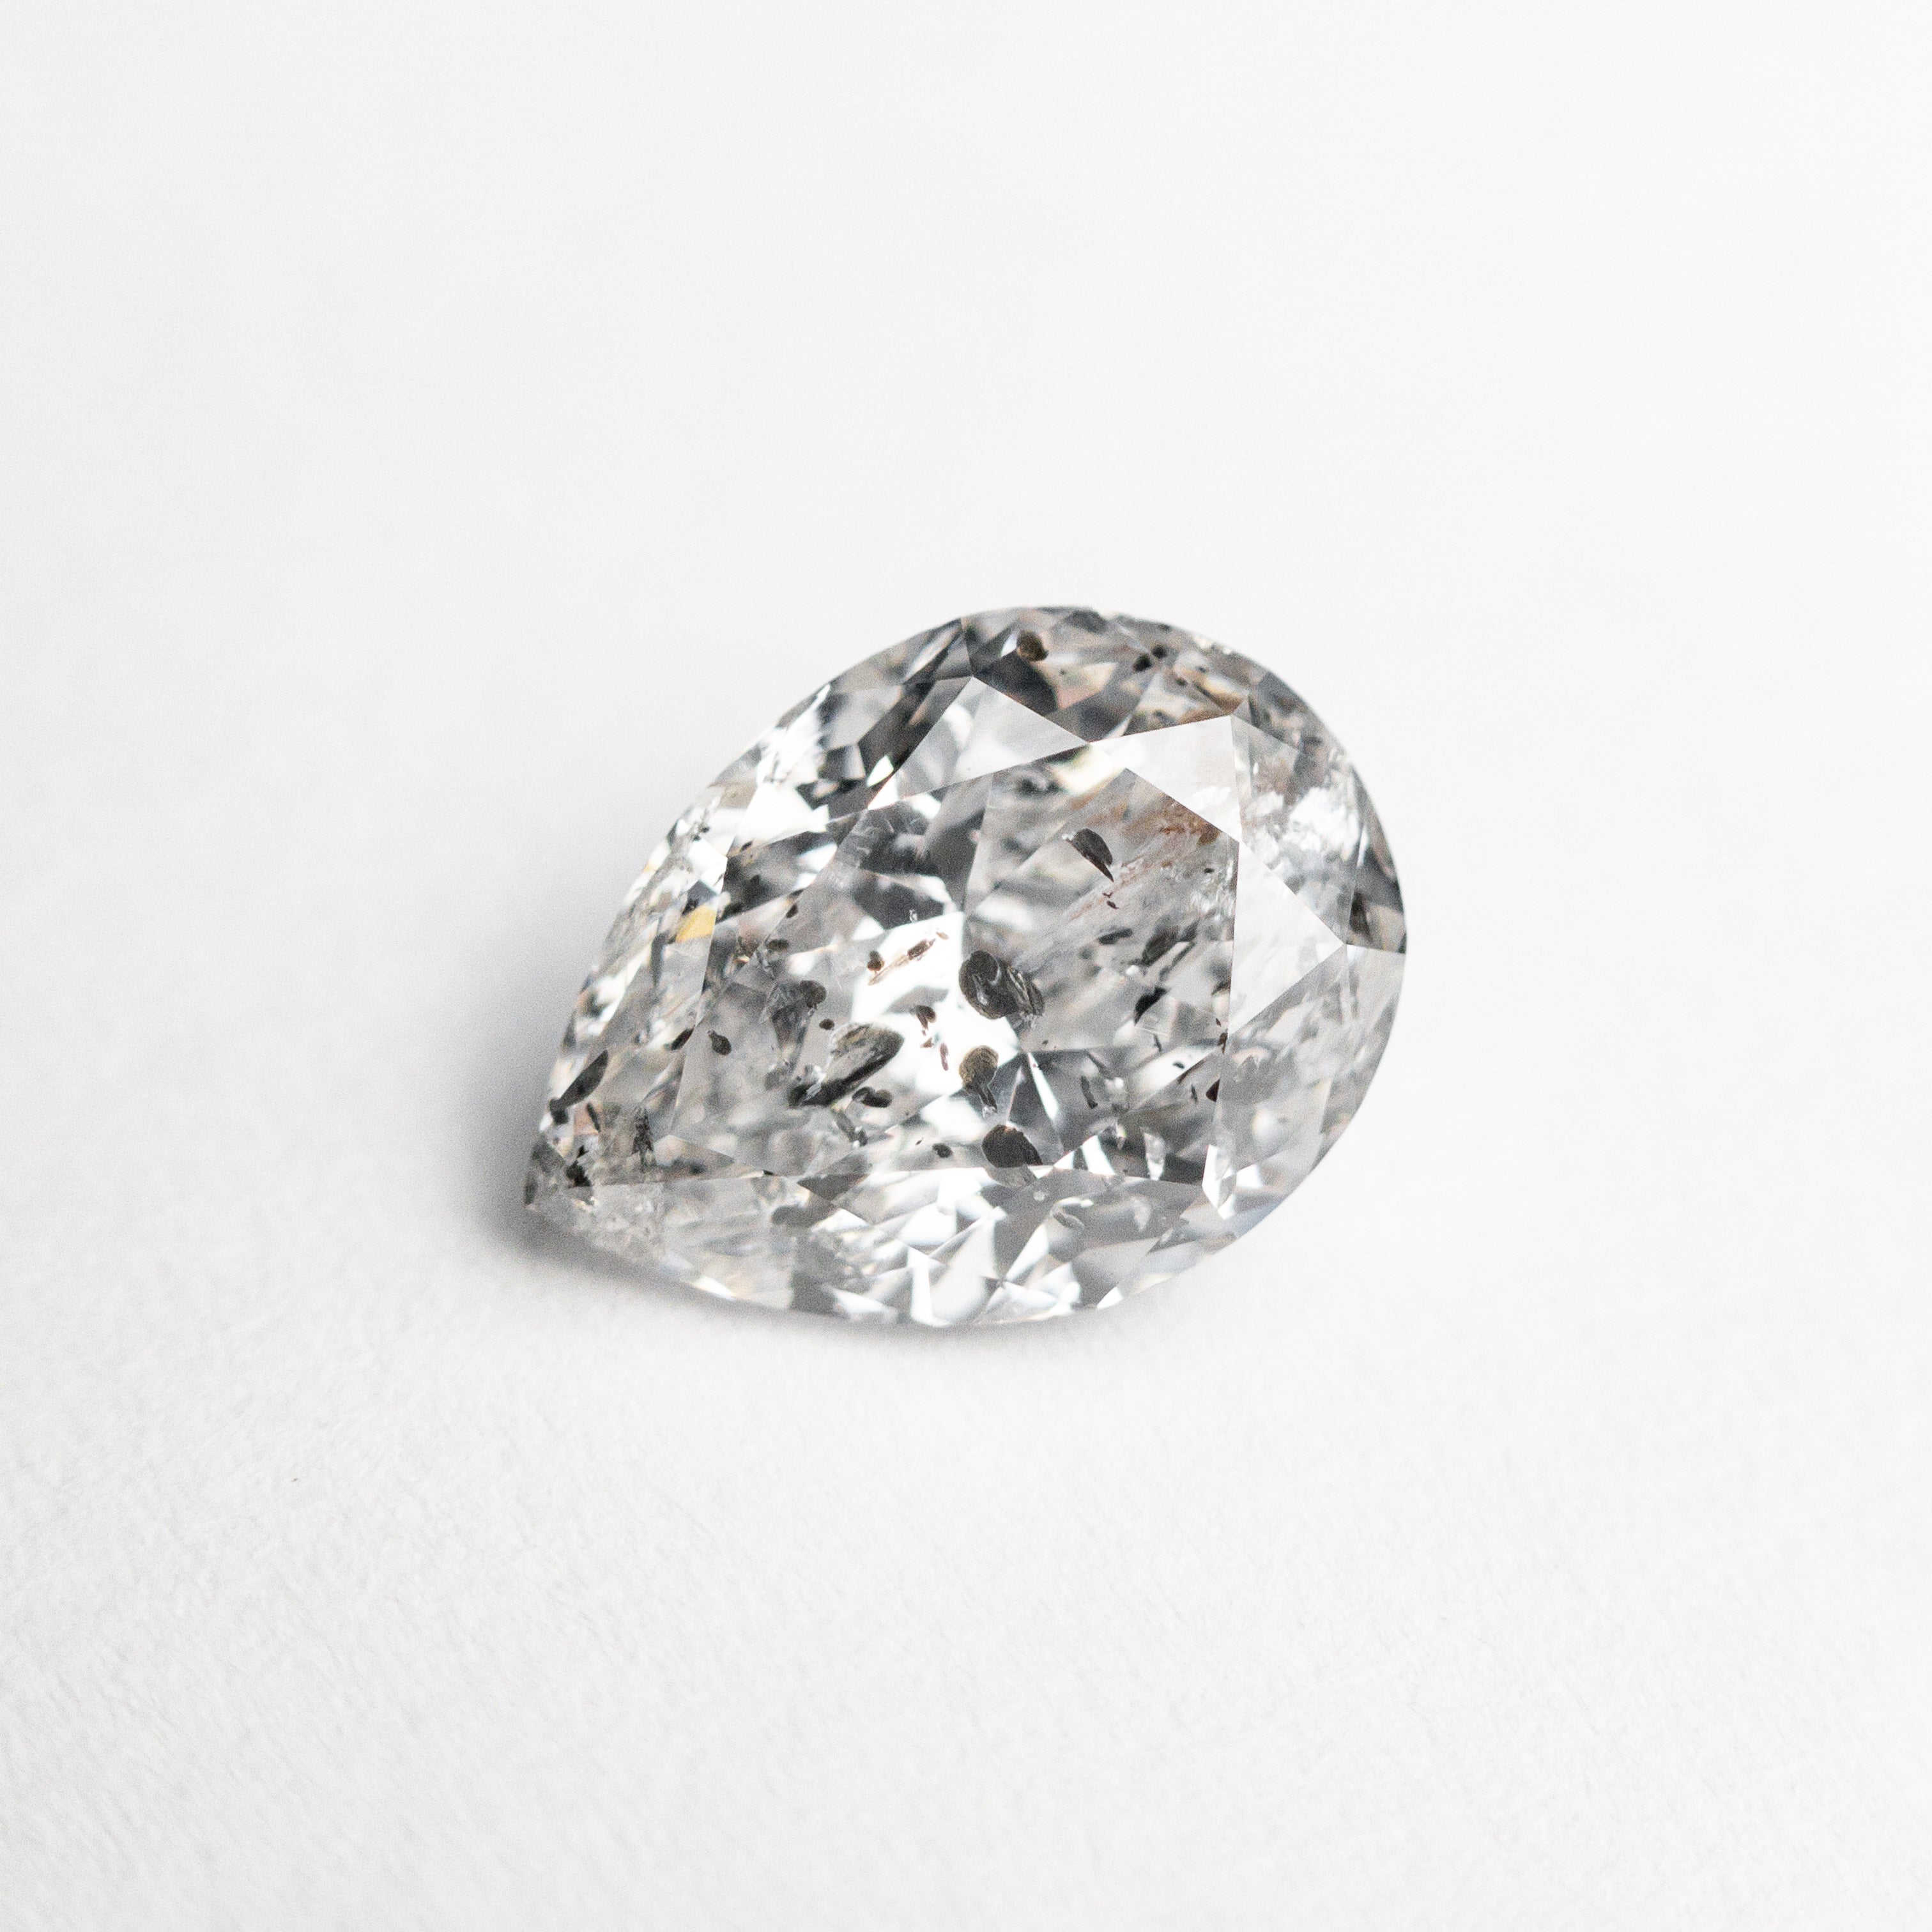 Salt and Pepper Brilliant Diamond - 1.22ct Pear